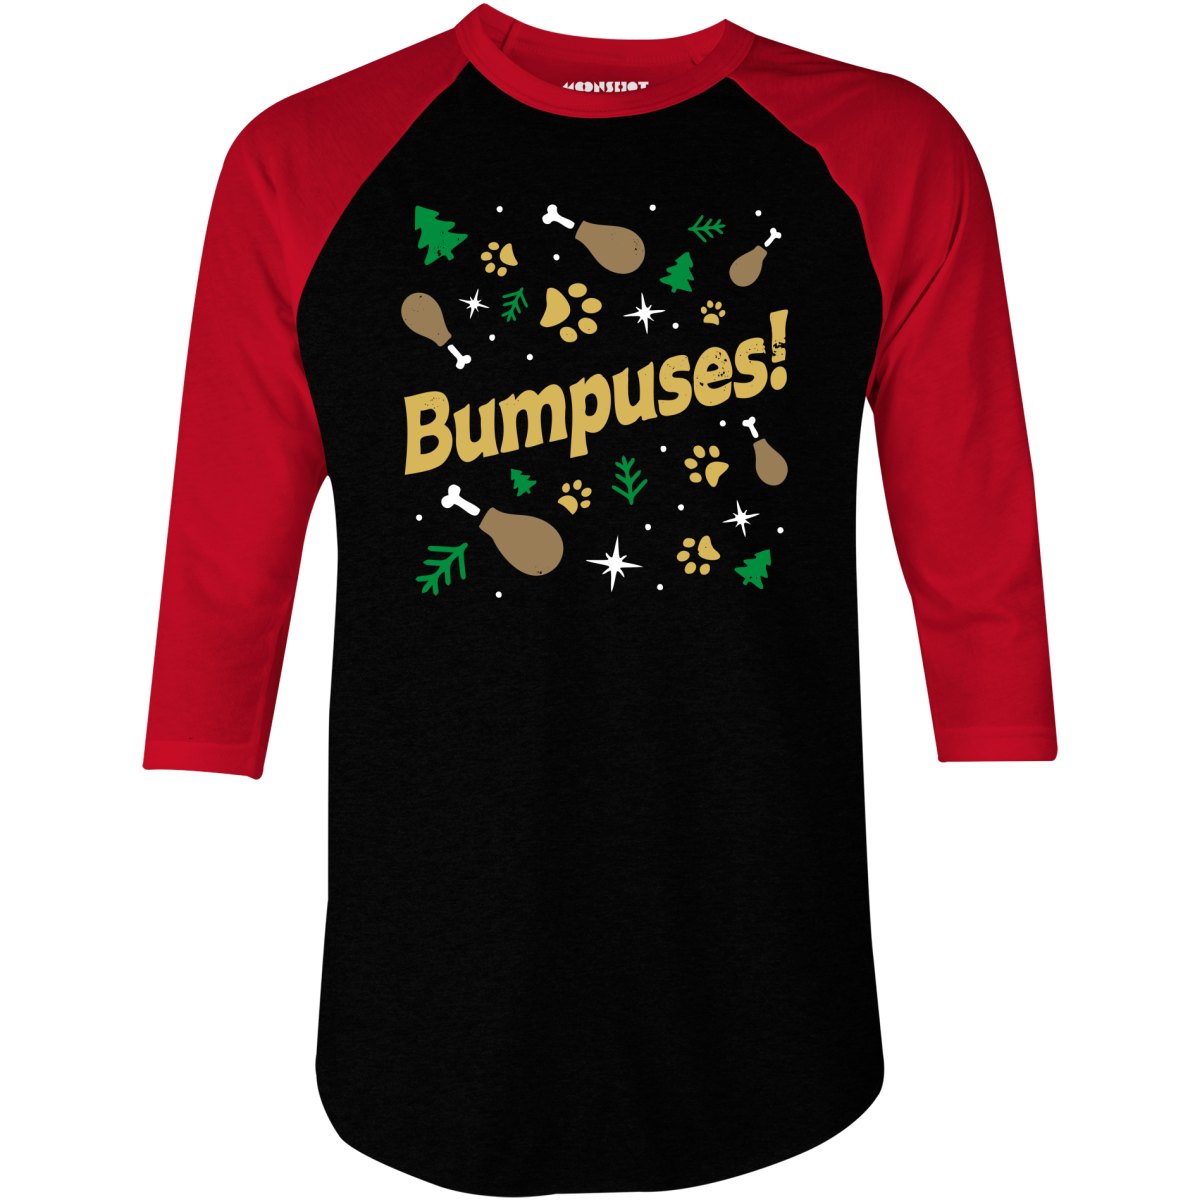 Bumpuses! - 3/4 Sleeve Raglan T-Shirt